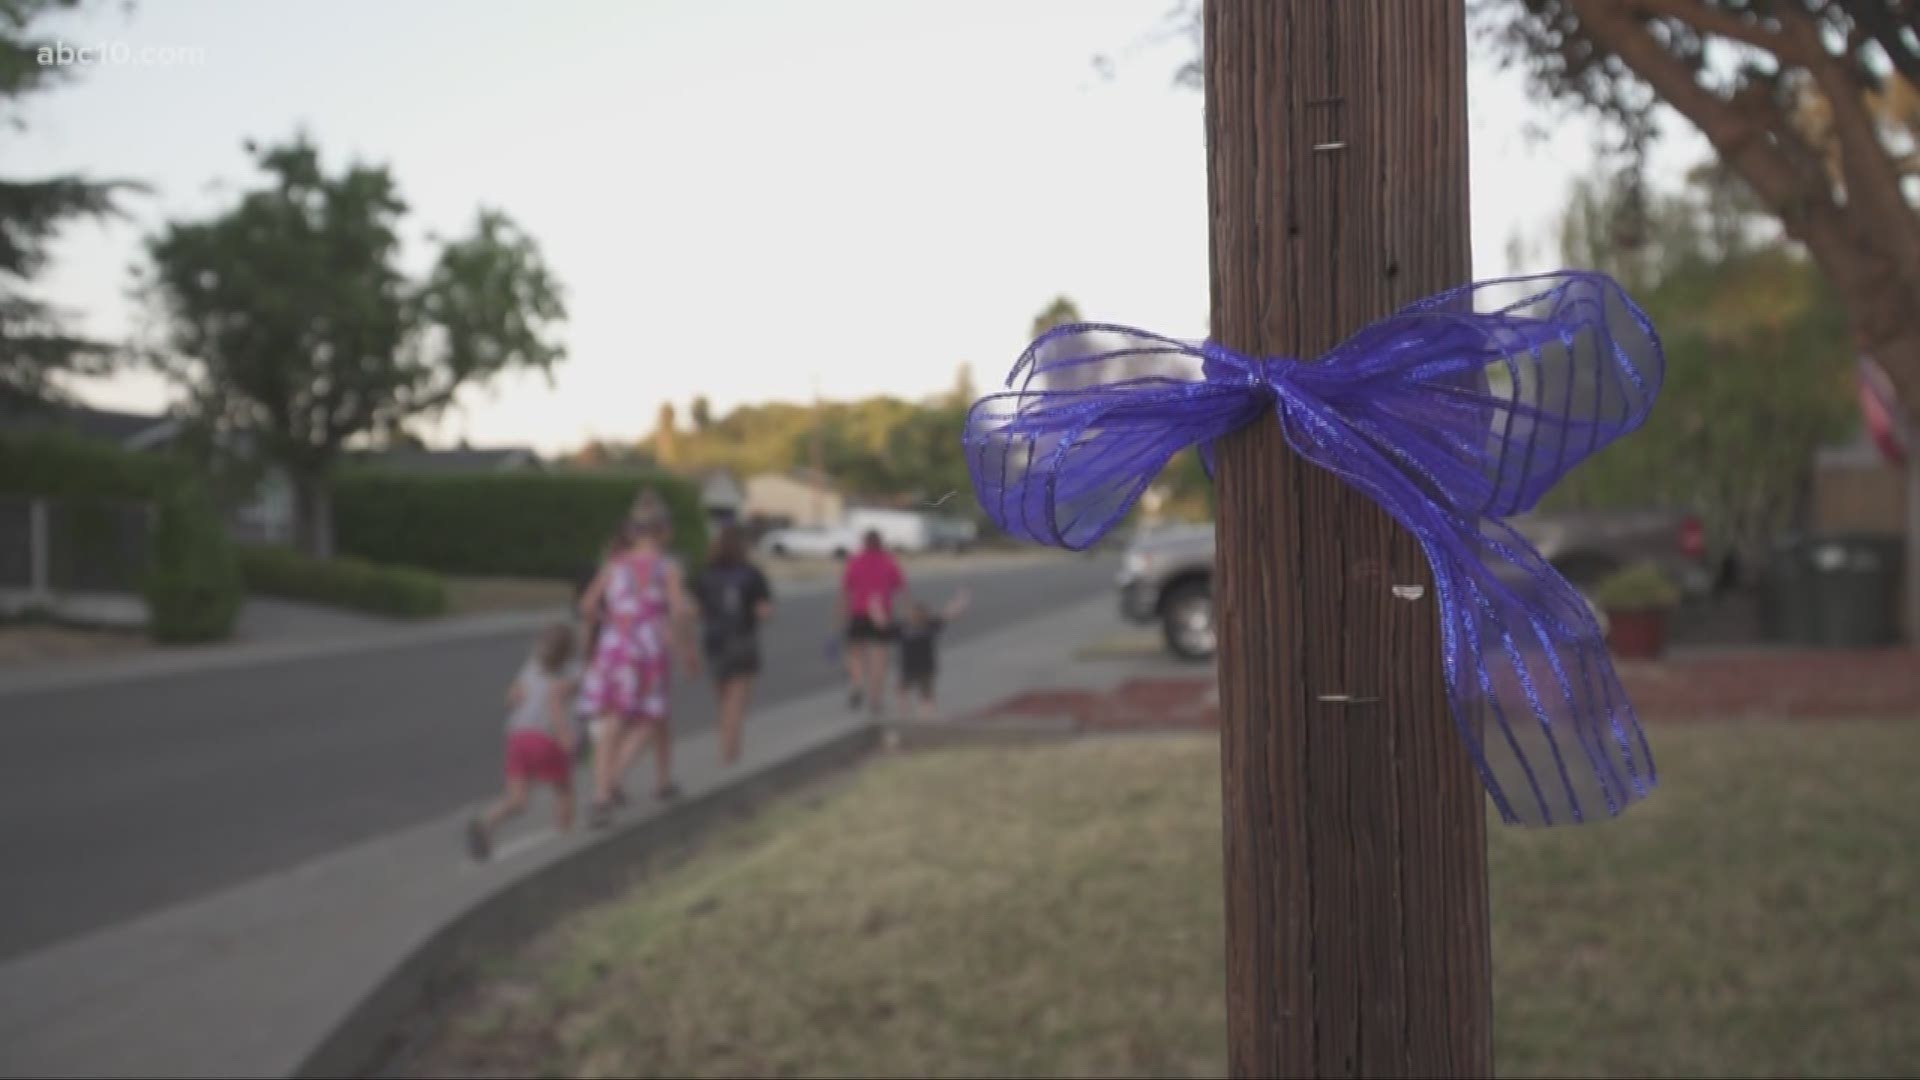 Family members of Sacramento County Sheriff's Deputies remembered Deputy Mark Stasyuk by placing blue ribbons in a neighborhood in Orangevale.